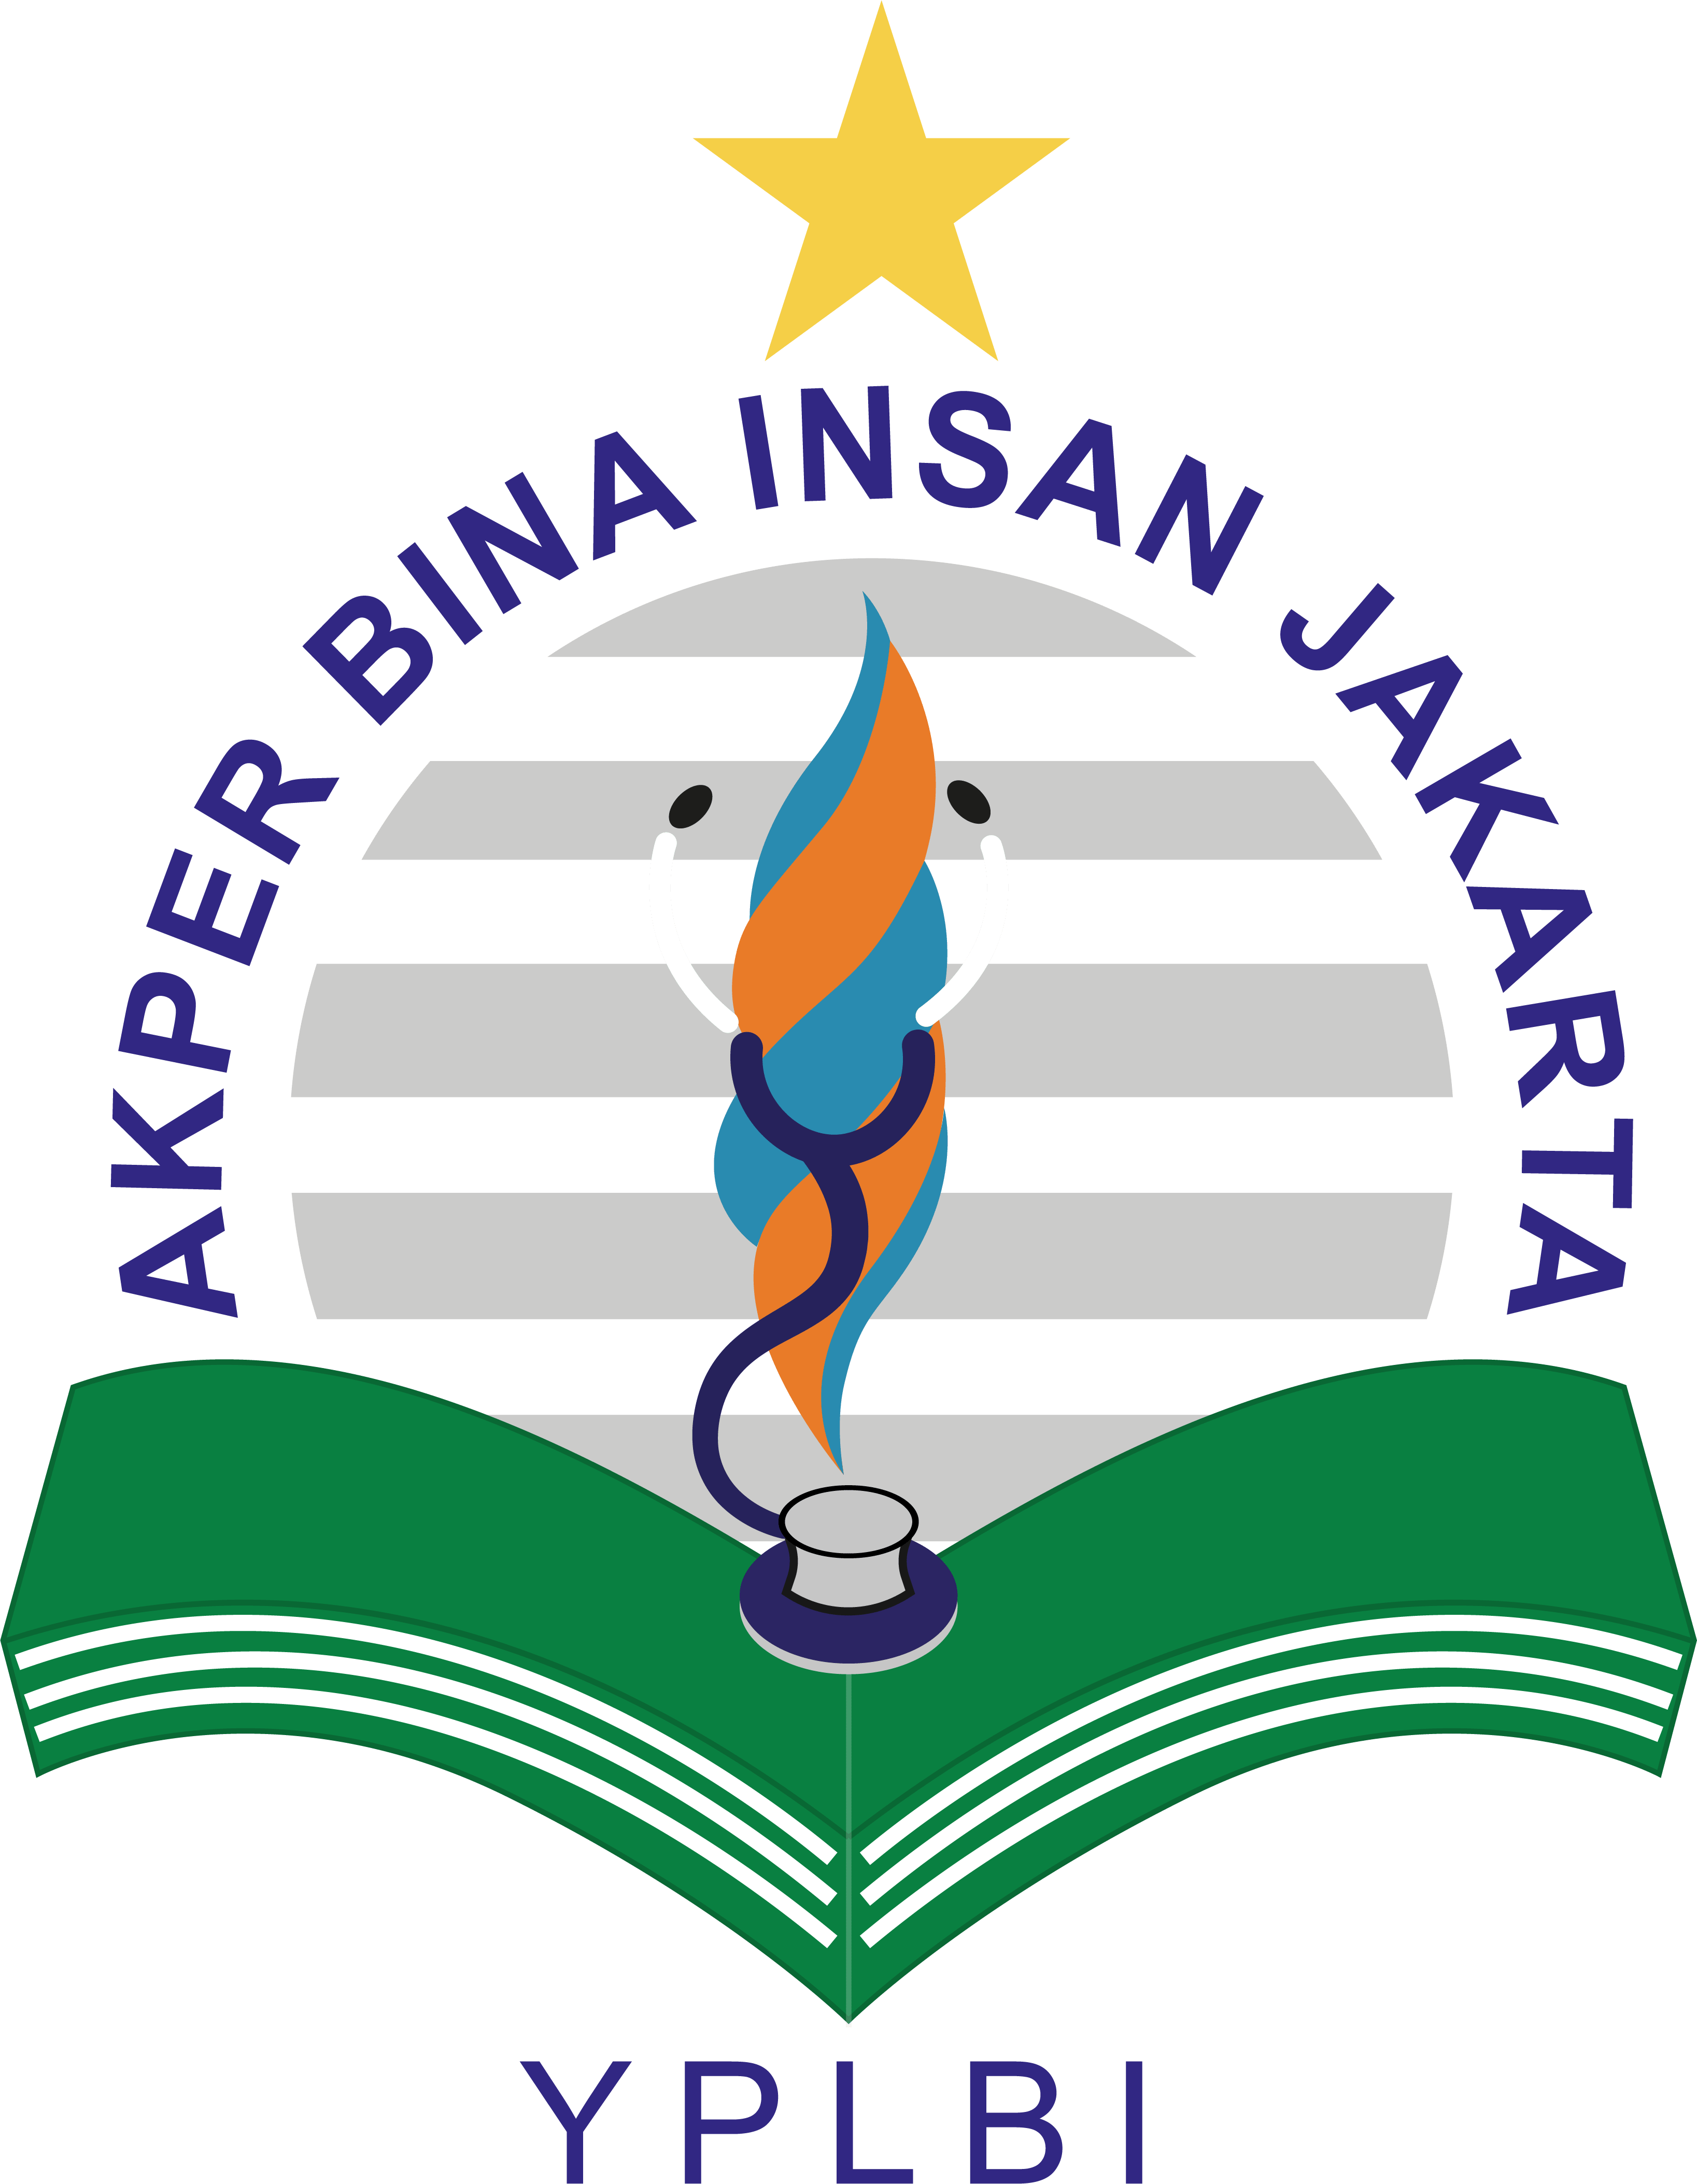 Akademi Keperawatan Bina Insan Jakarta